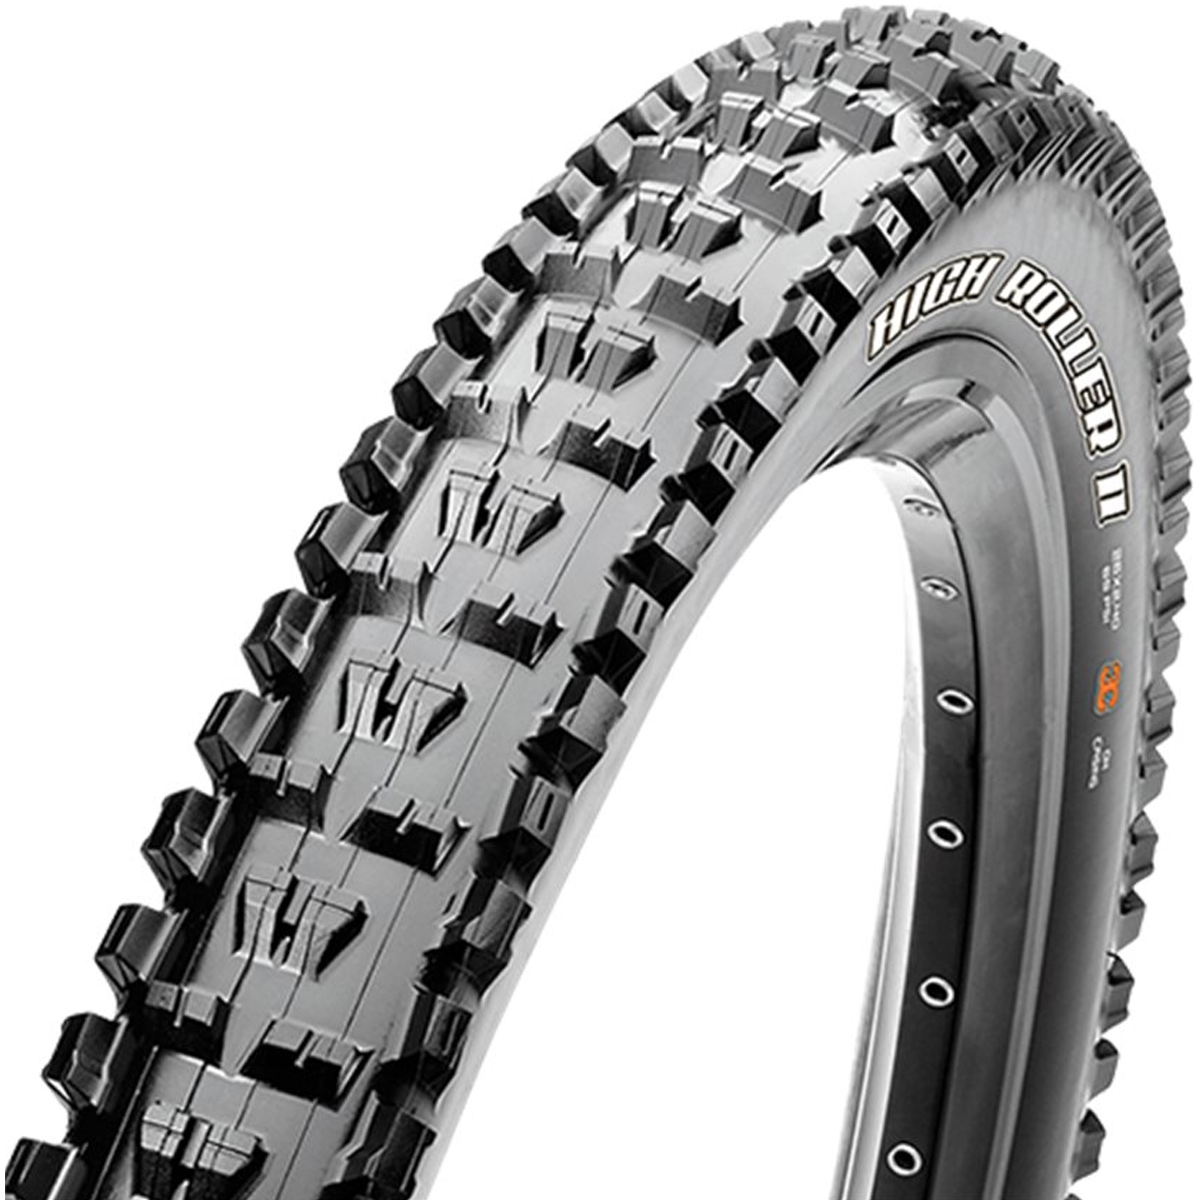 Details about   Rubena Racing Pro 650B Folding Mountain Bike Tire 27.5 x 2.0 27.5x2.0 520 GRAMS 